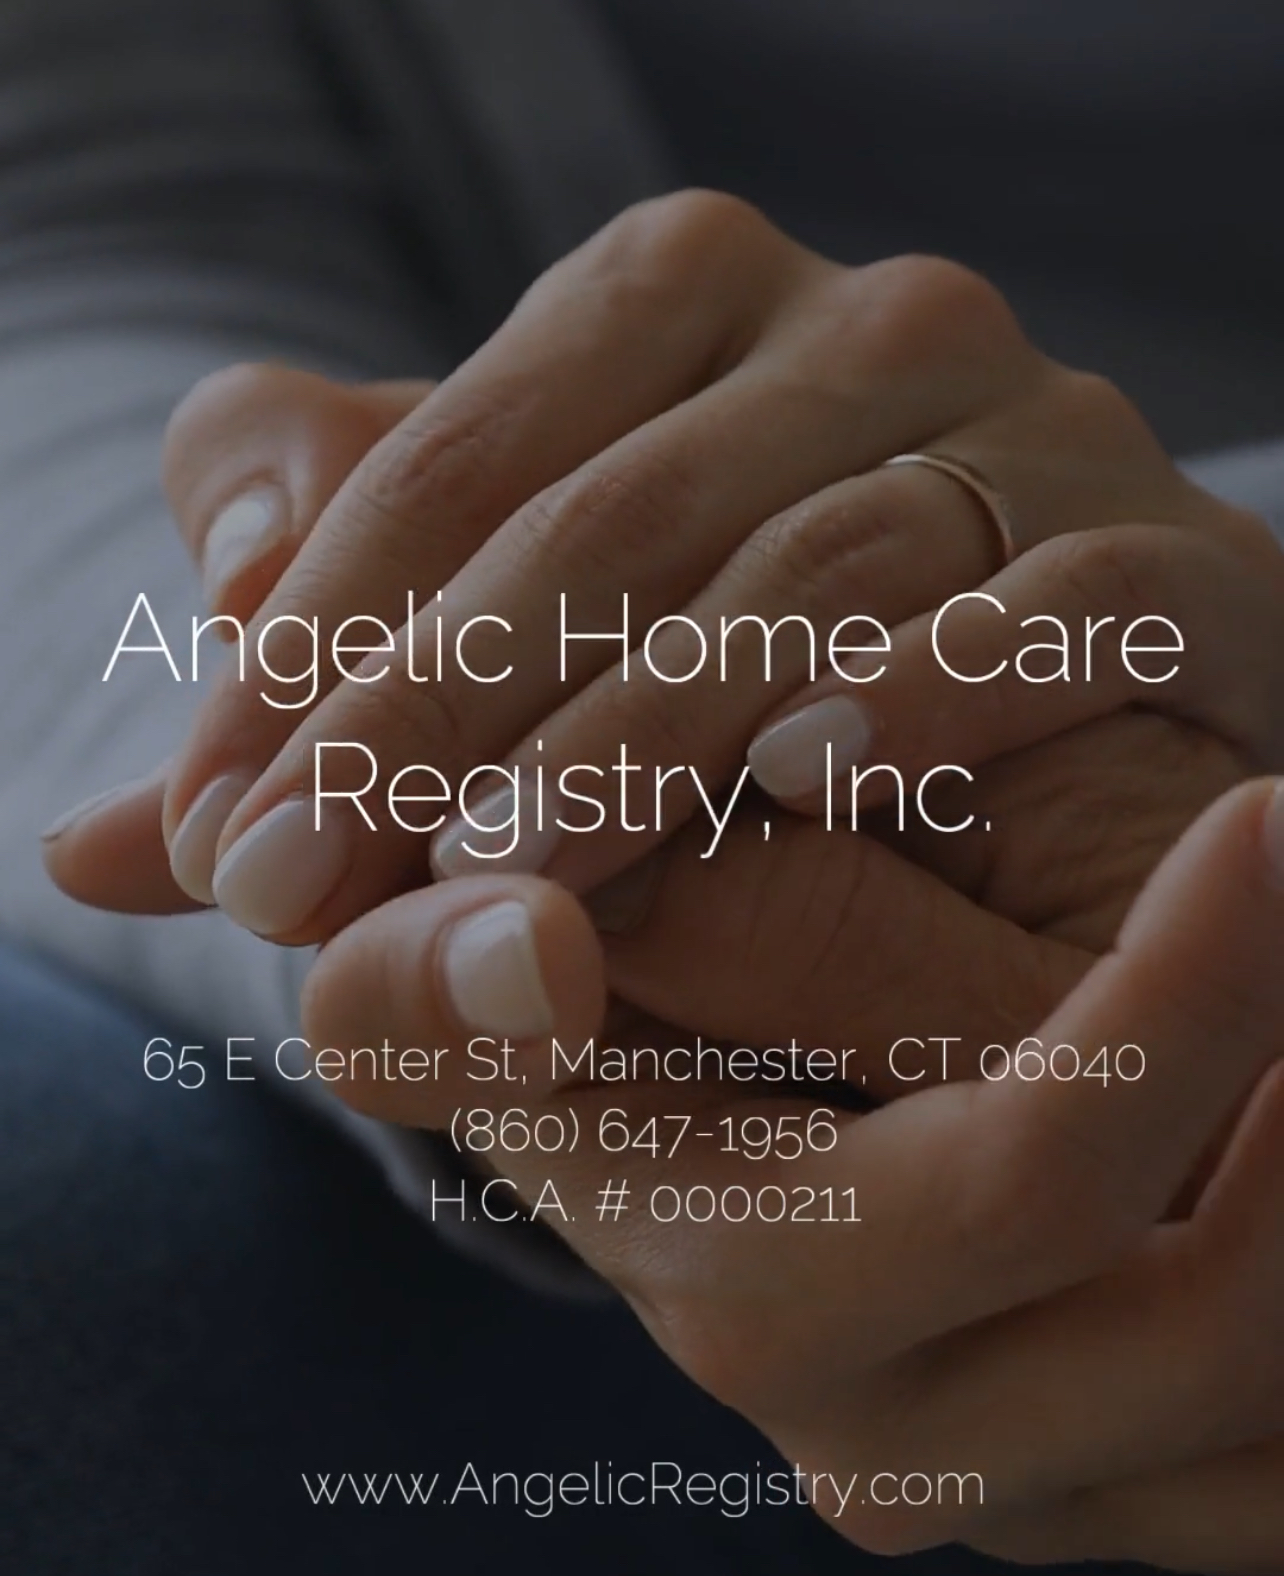 Angelic Home Care Registry, Inc. #HCA0000211